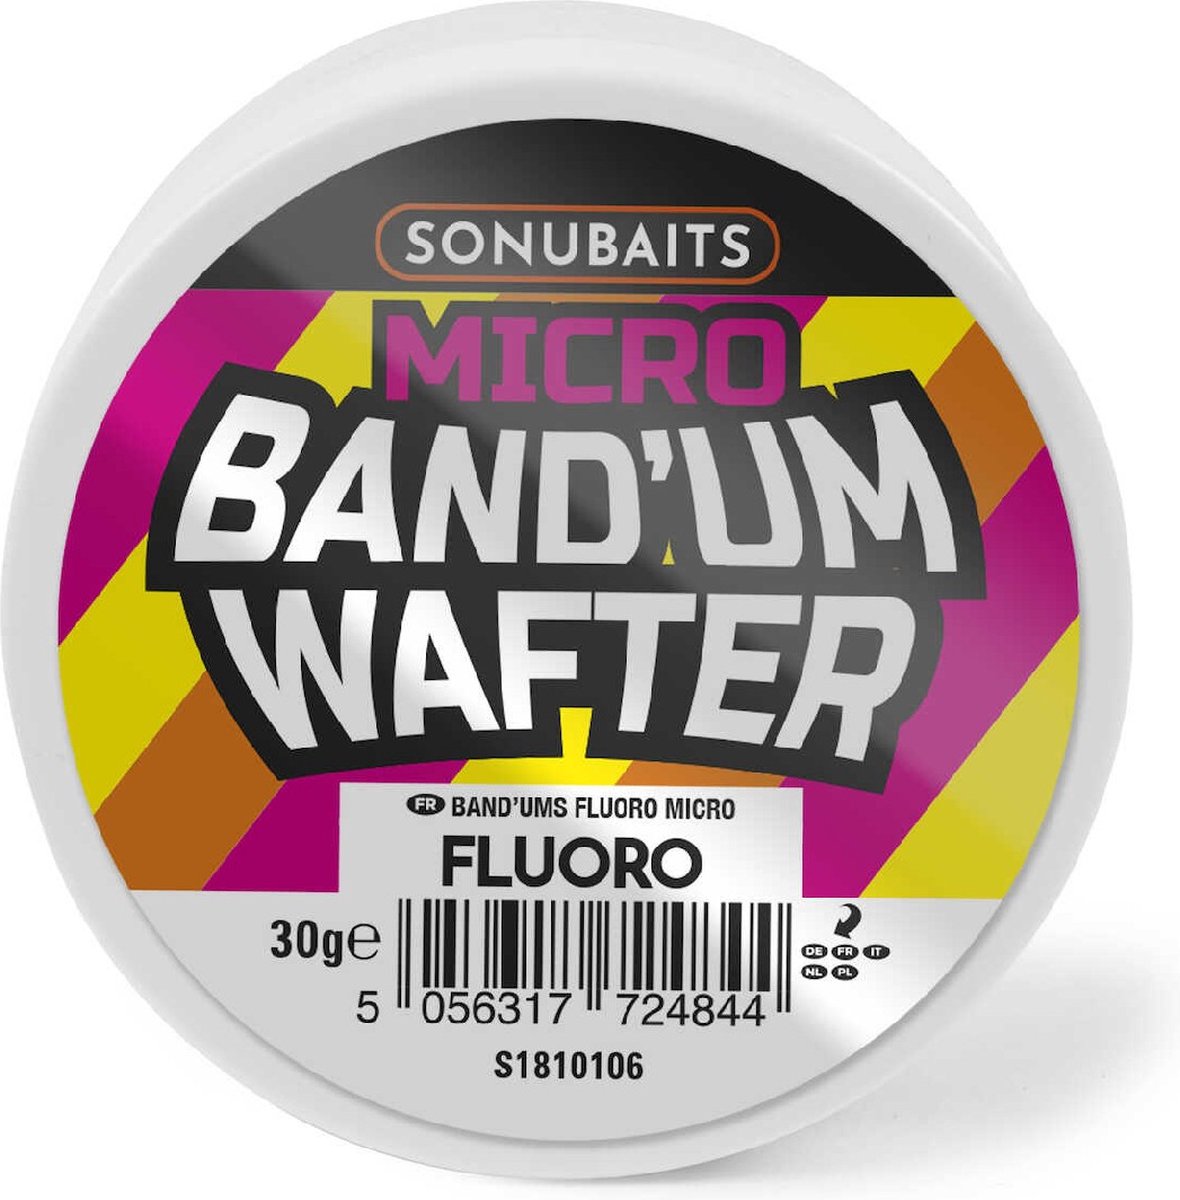 Sonubaits Micro Band’um Wafter 30gr - Smaak : Fluoro